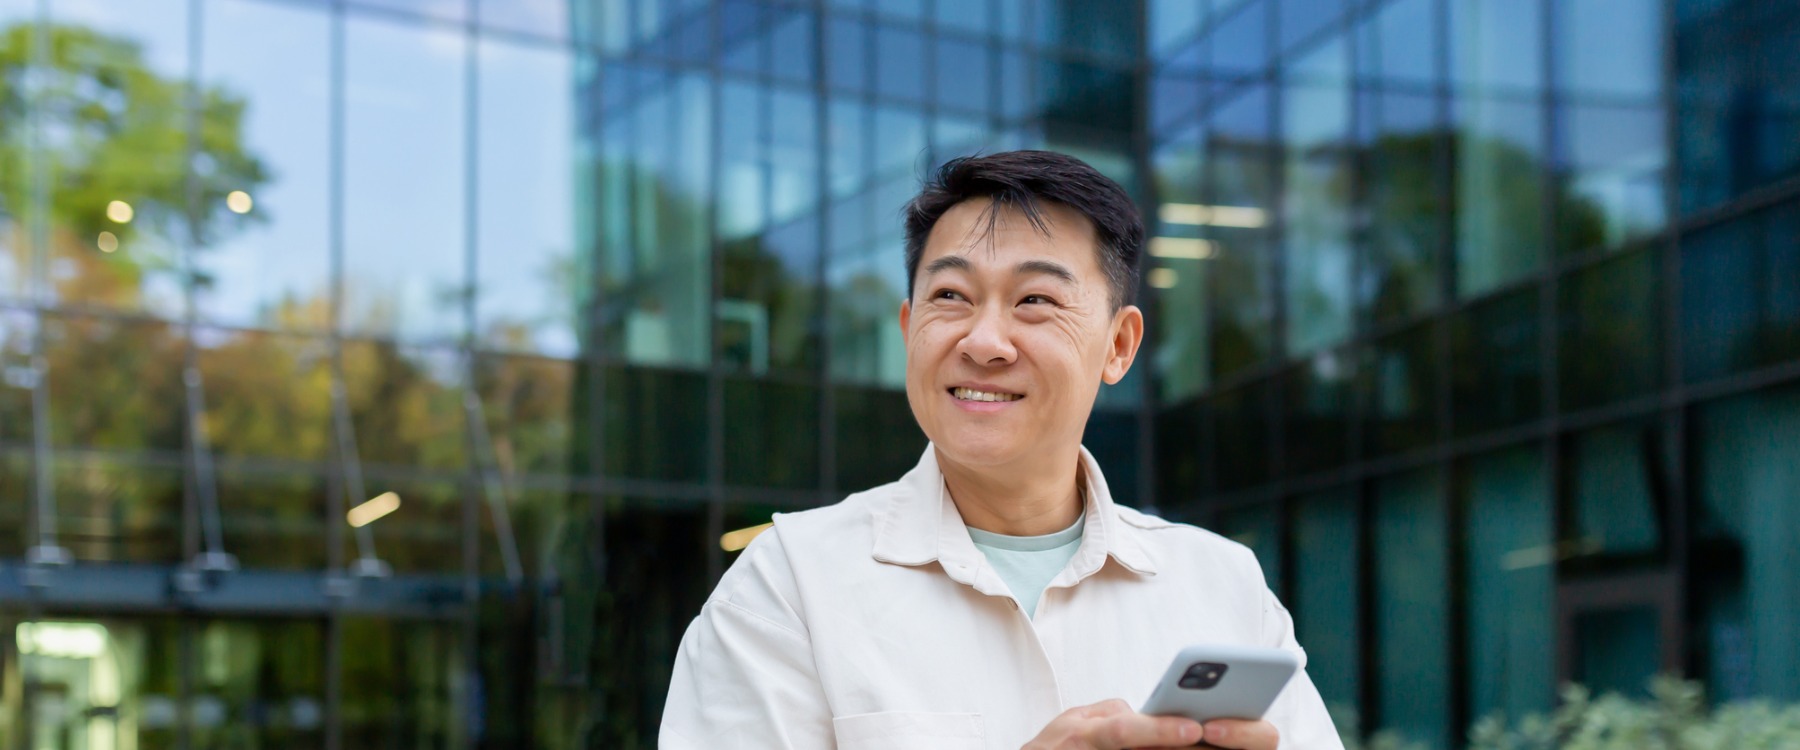 Smiling asian man holding phone